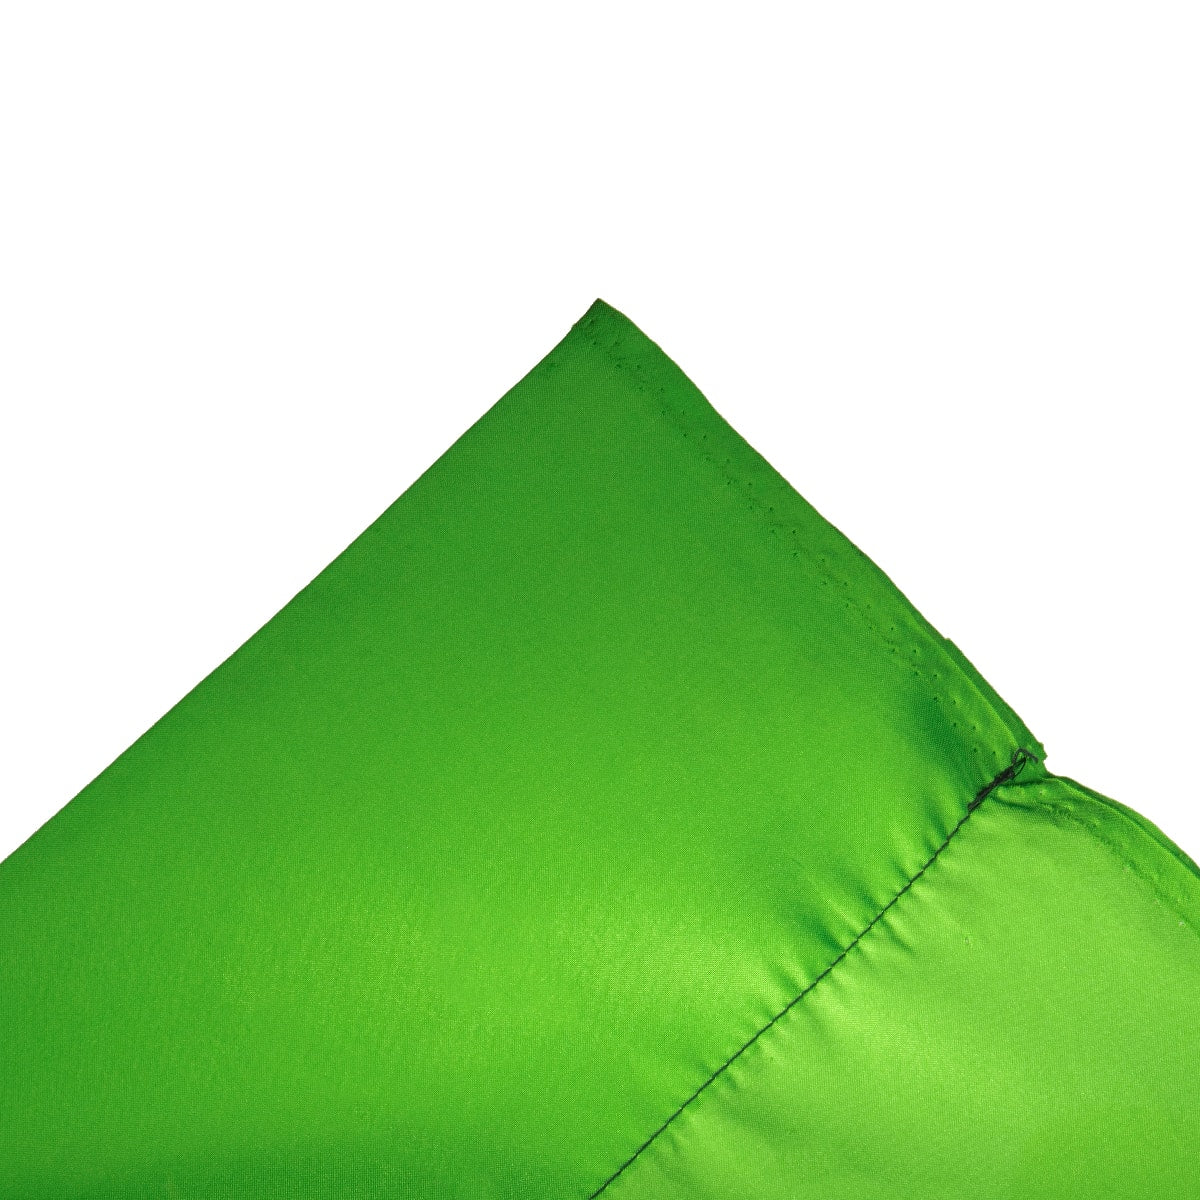  Chroma Green Material/Cotton 300 x 400 cm / 10 x 12'